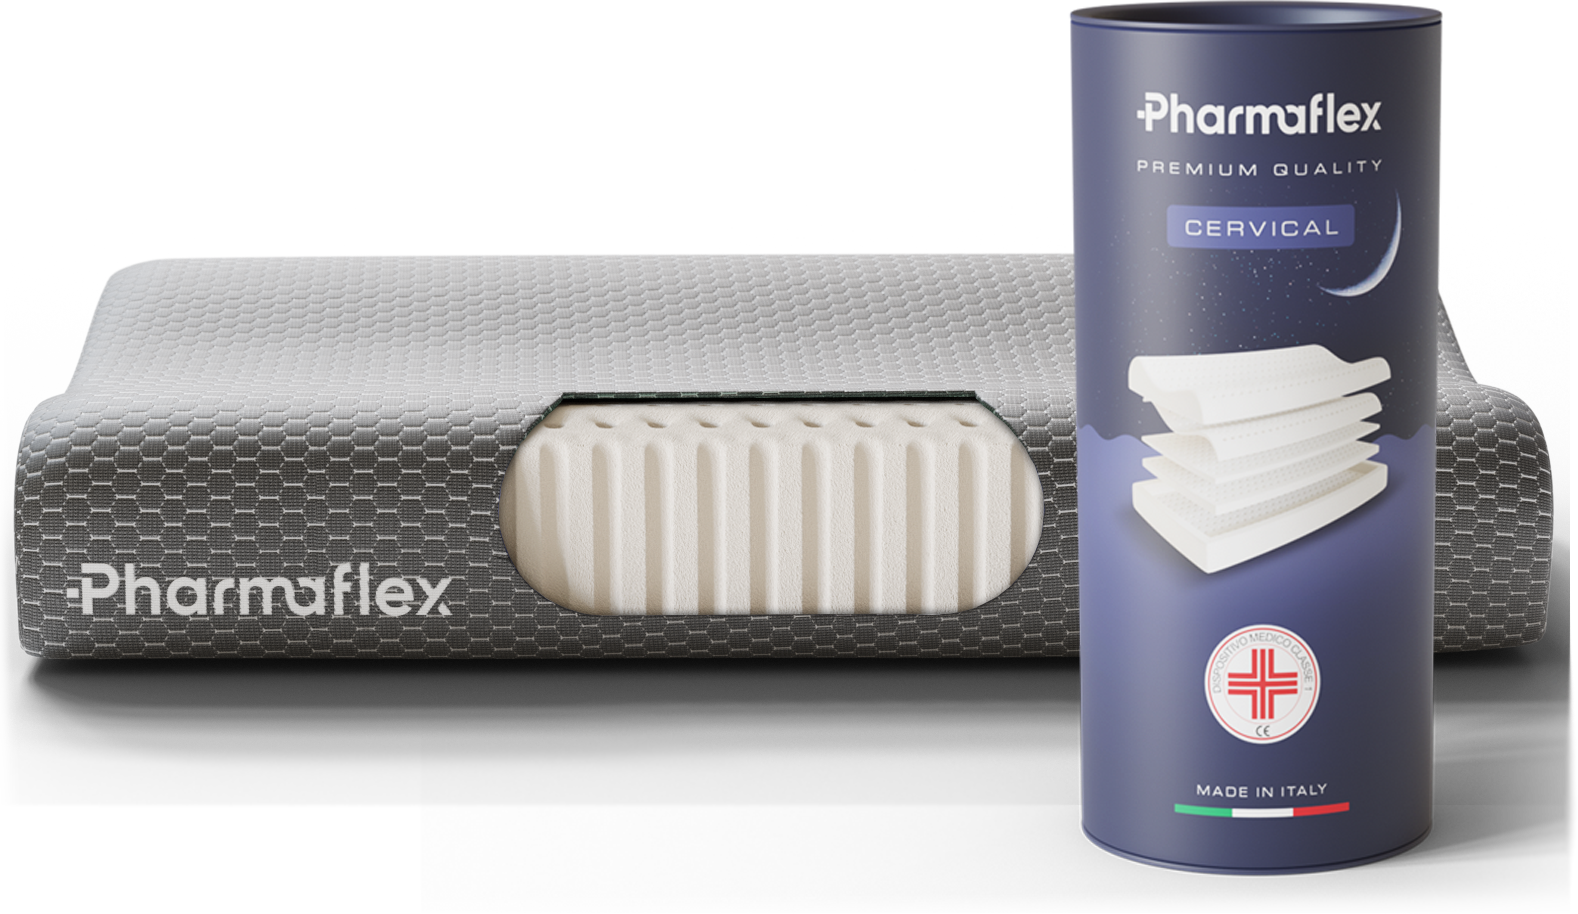 Pharmaflex Cervical, night cervical pillow